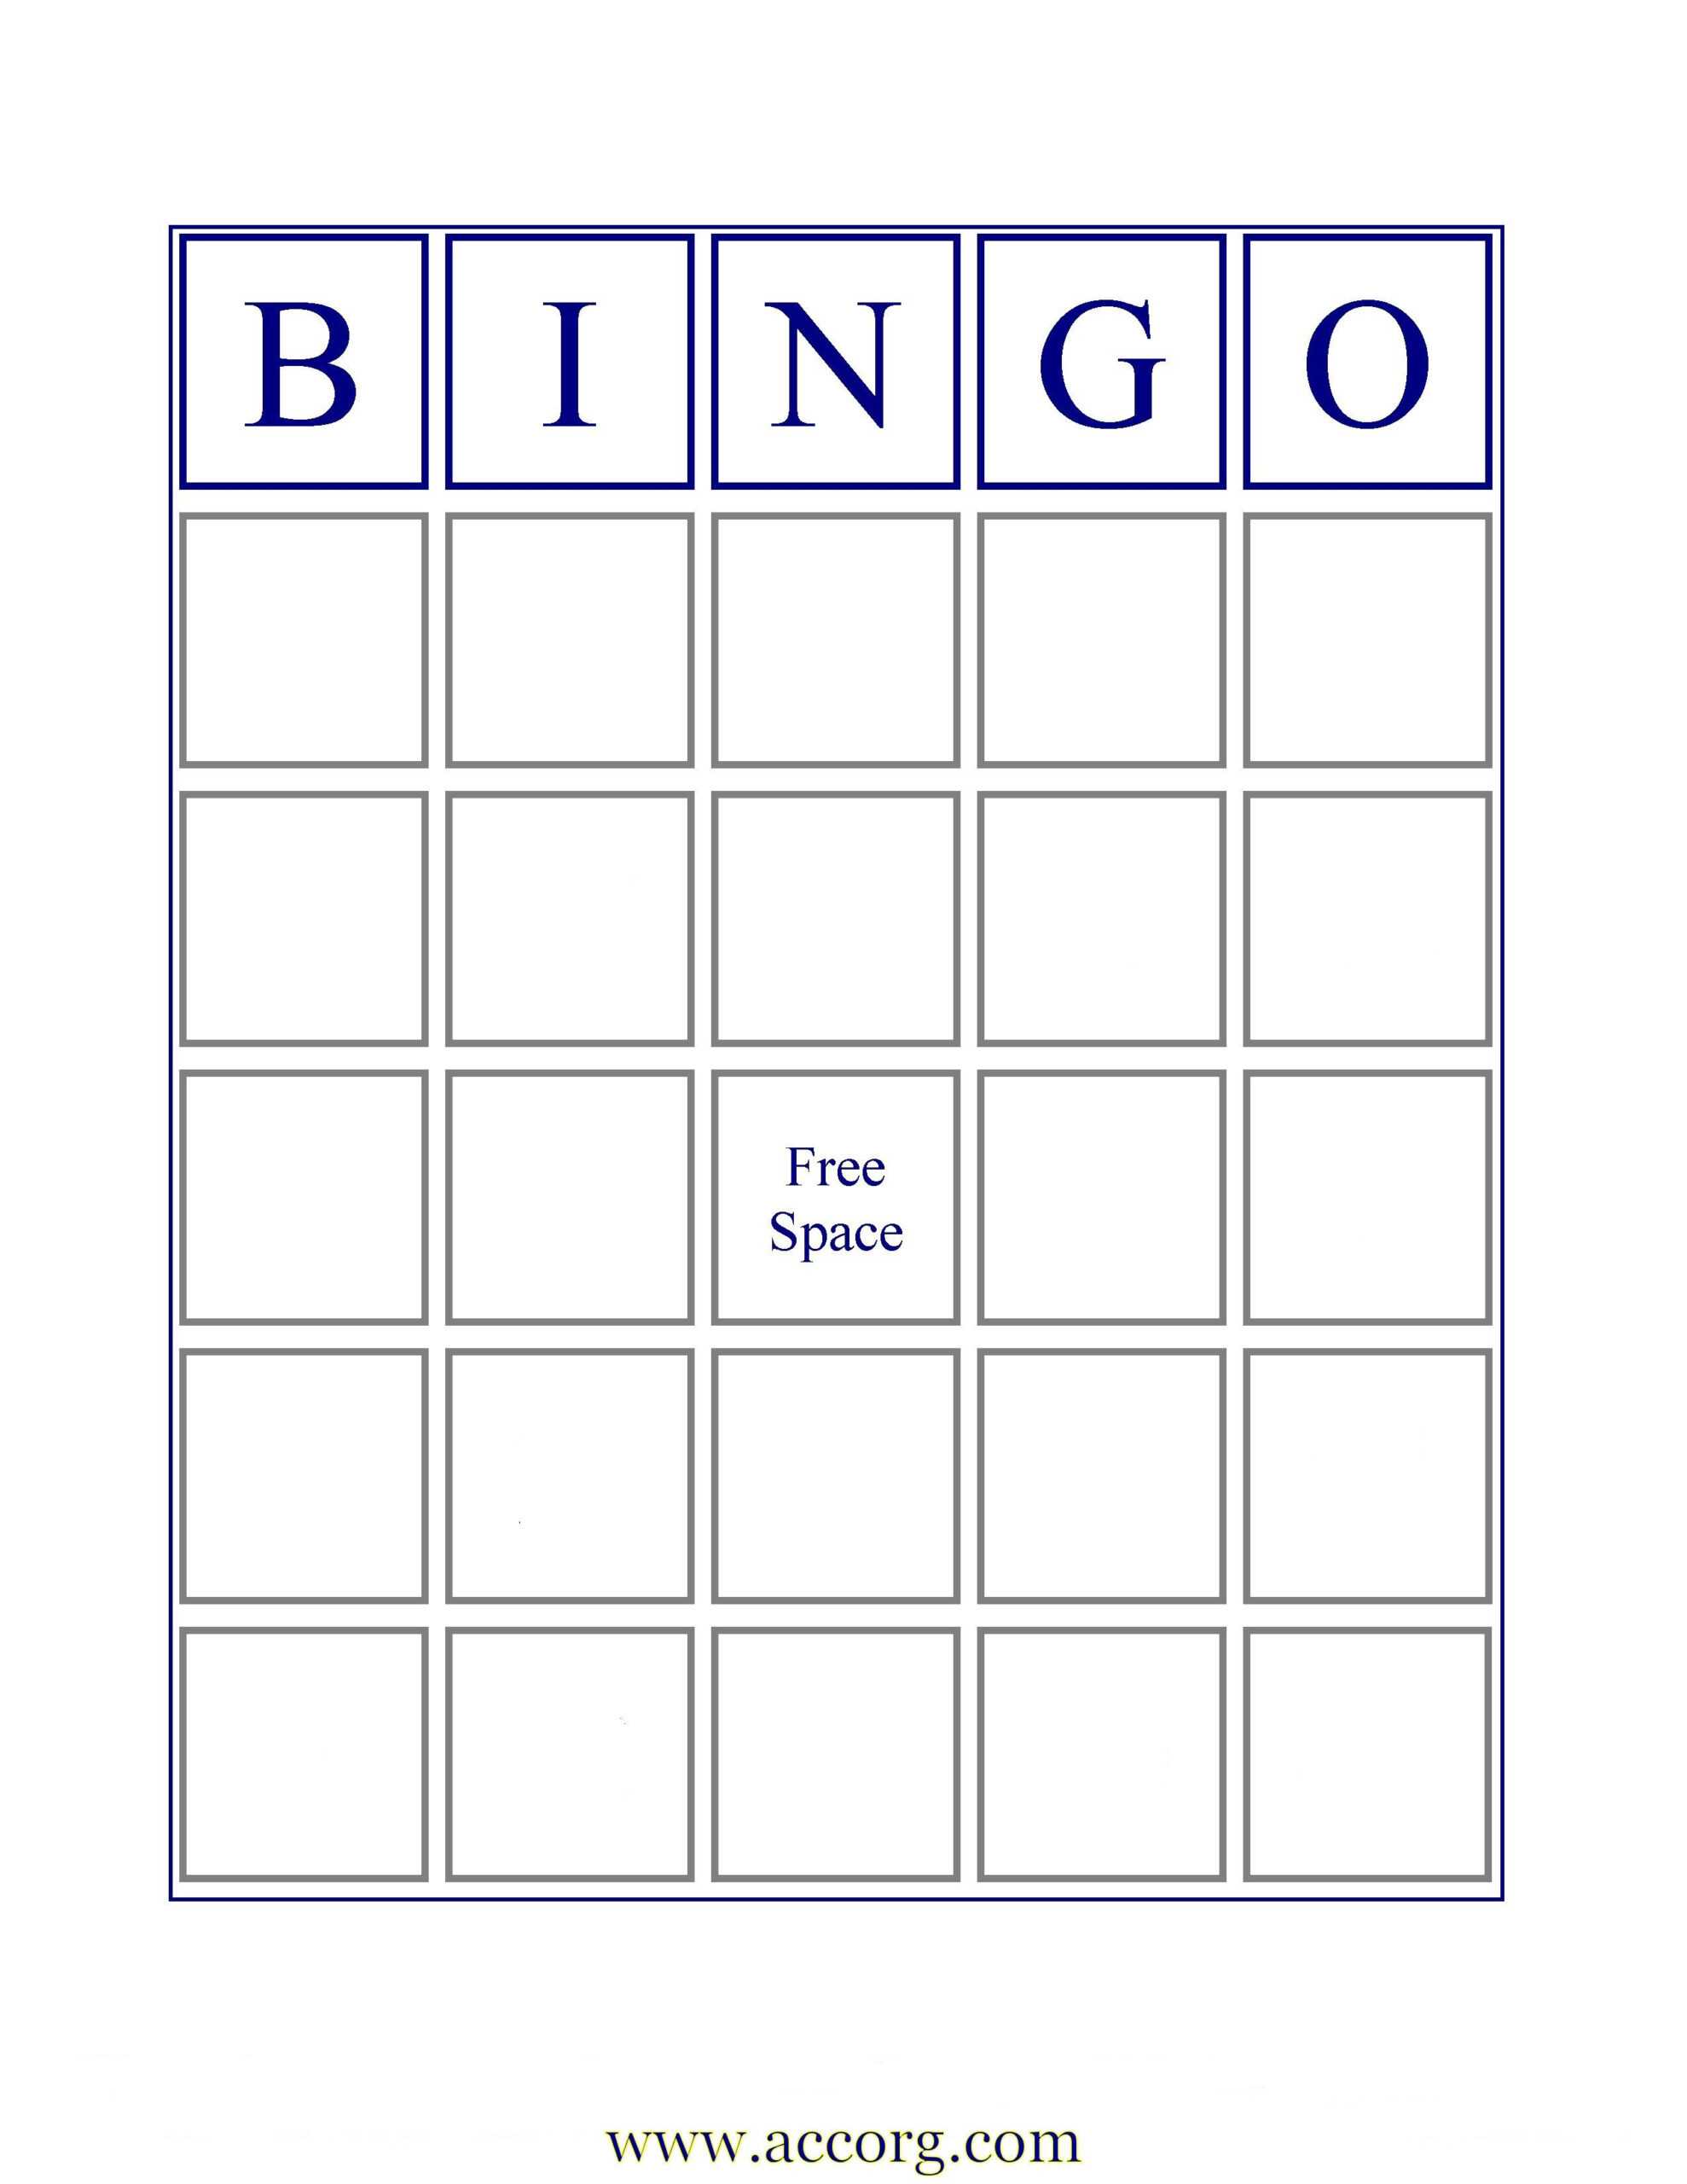 Blank Bingo Cards | If You Want An Image Of A Standard Bingo Throughout Blank Bingo Template Pdf